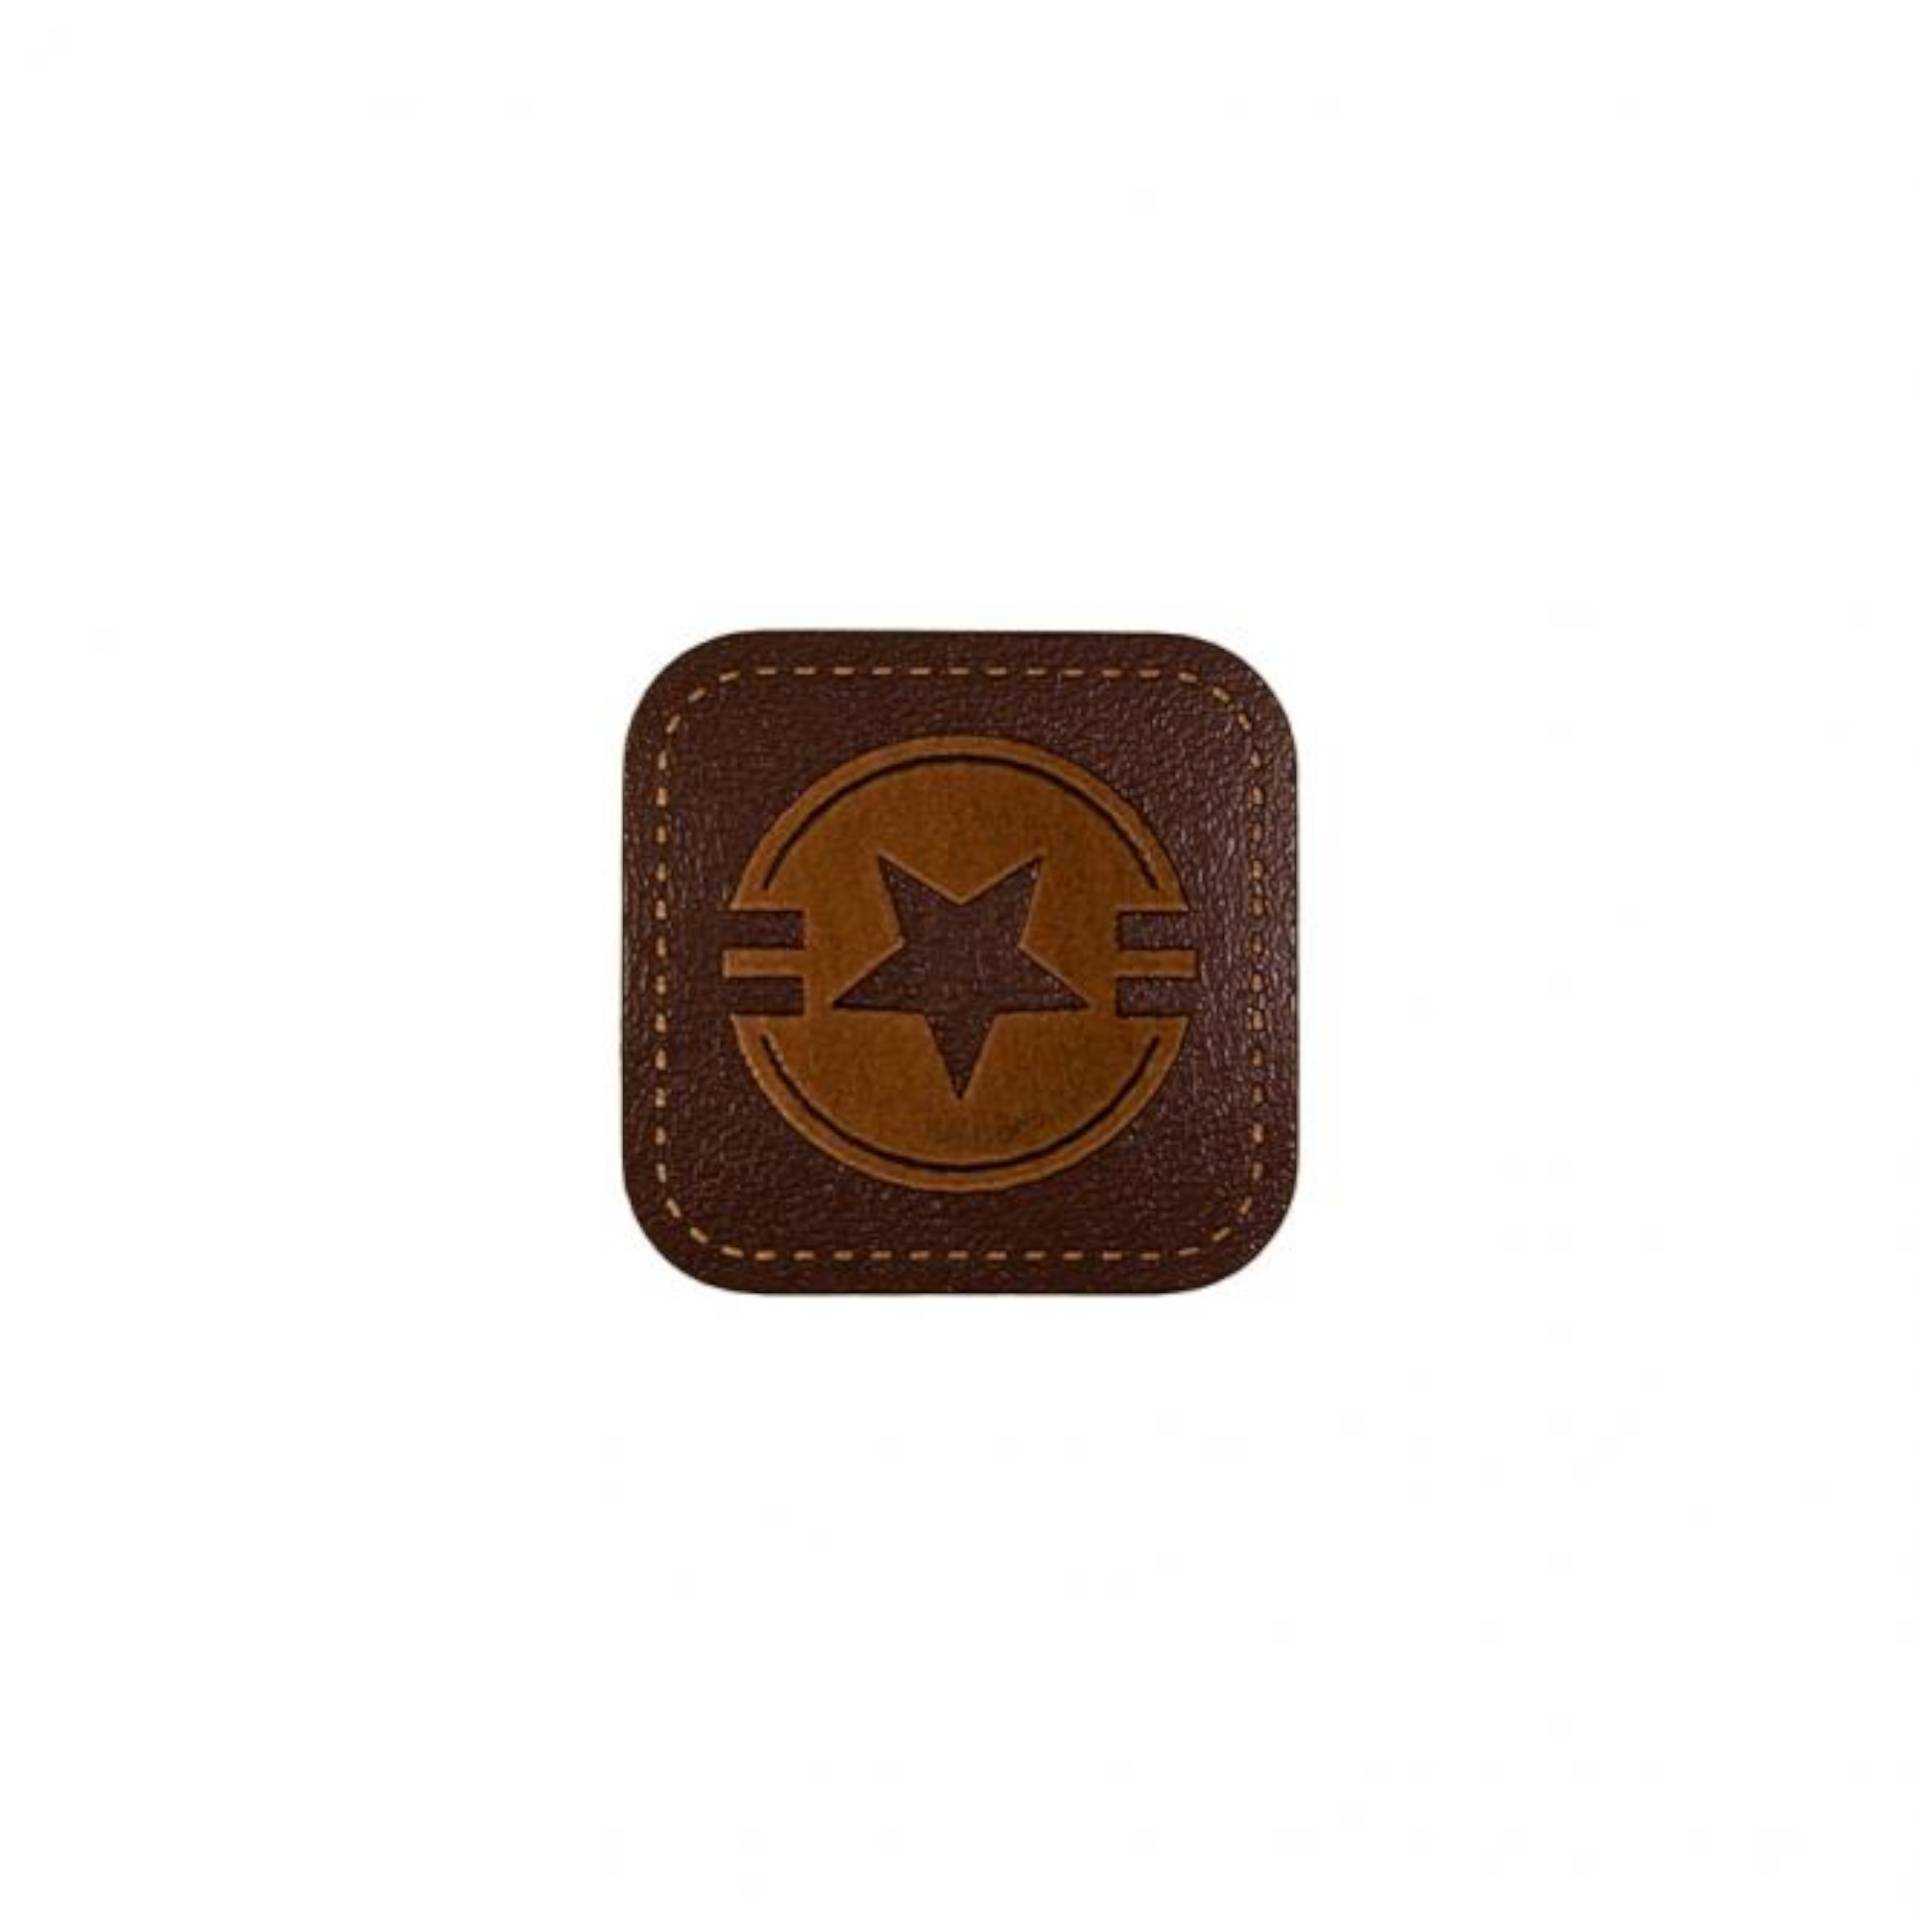 Applikation Stern- Emblem von Stoffe Hemmers